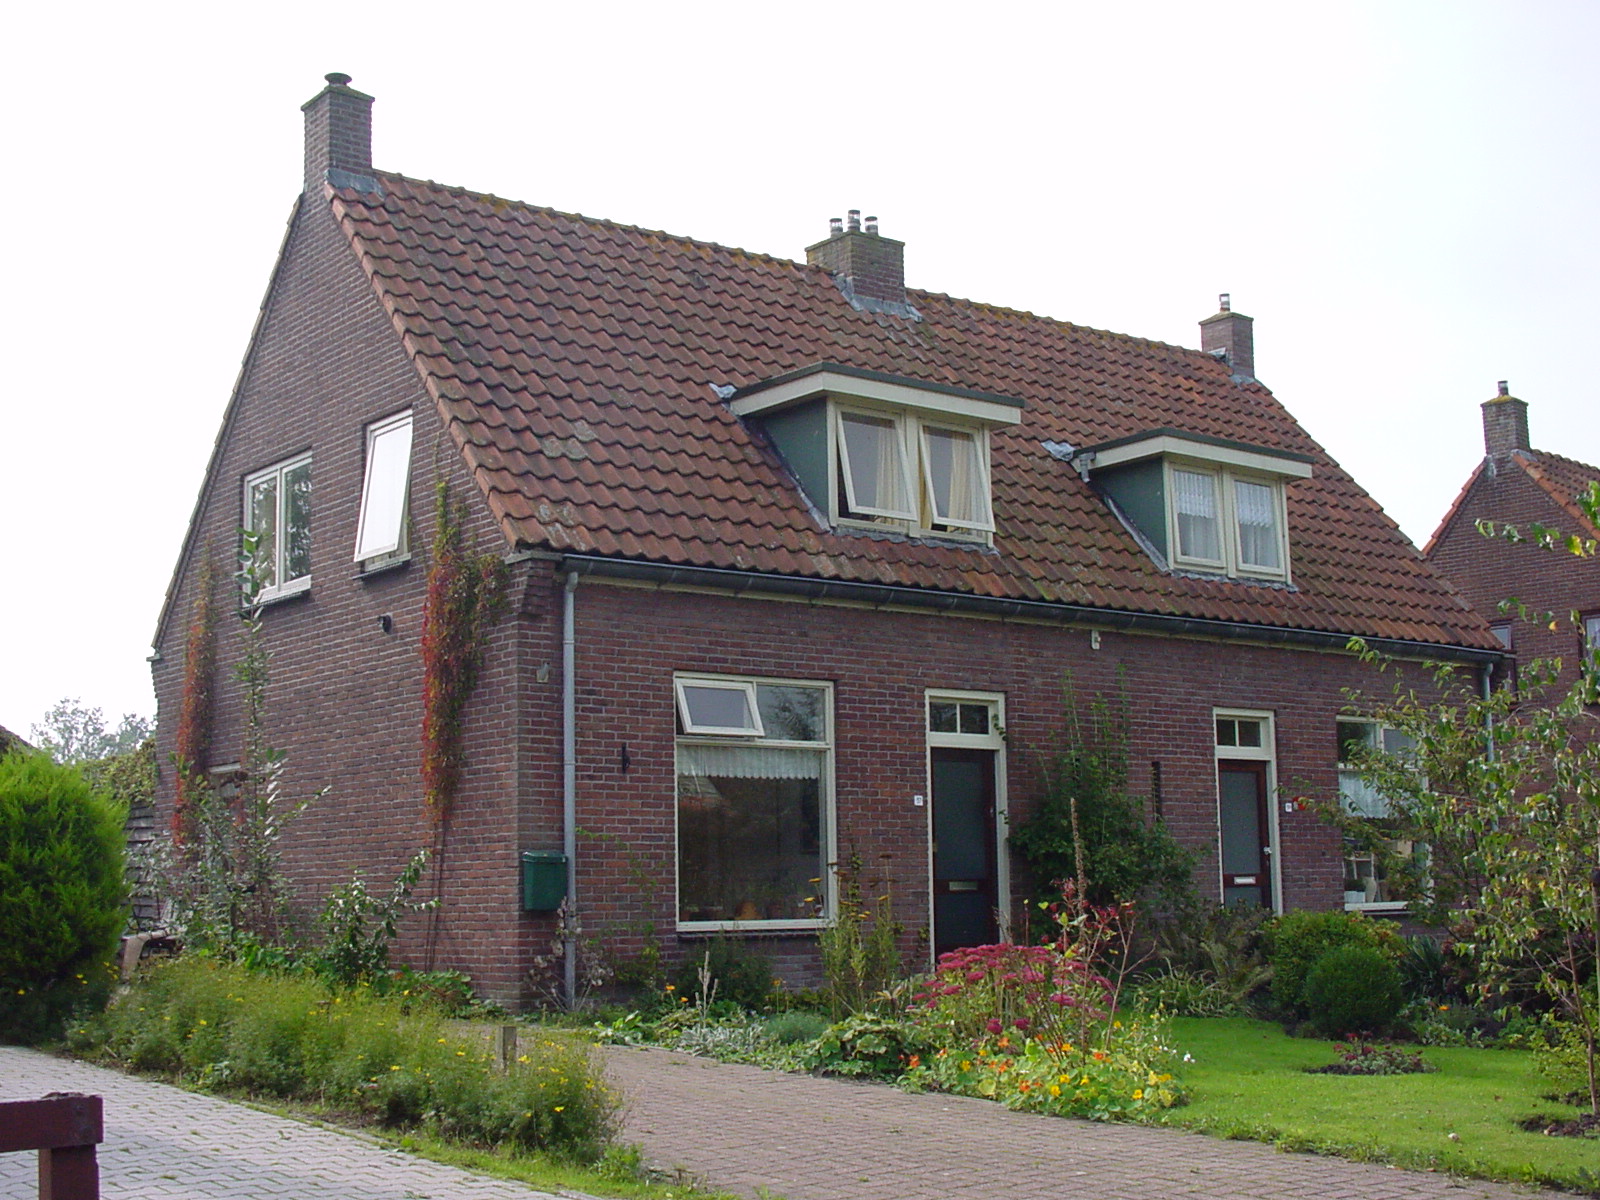 Ten Holtheweg 37, 8341 PE Steenwijkerwold, Nederland